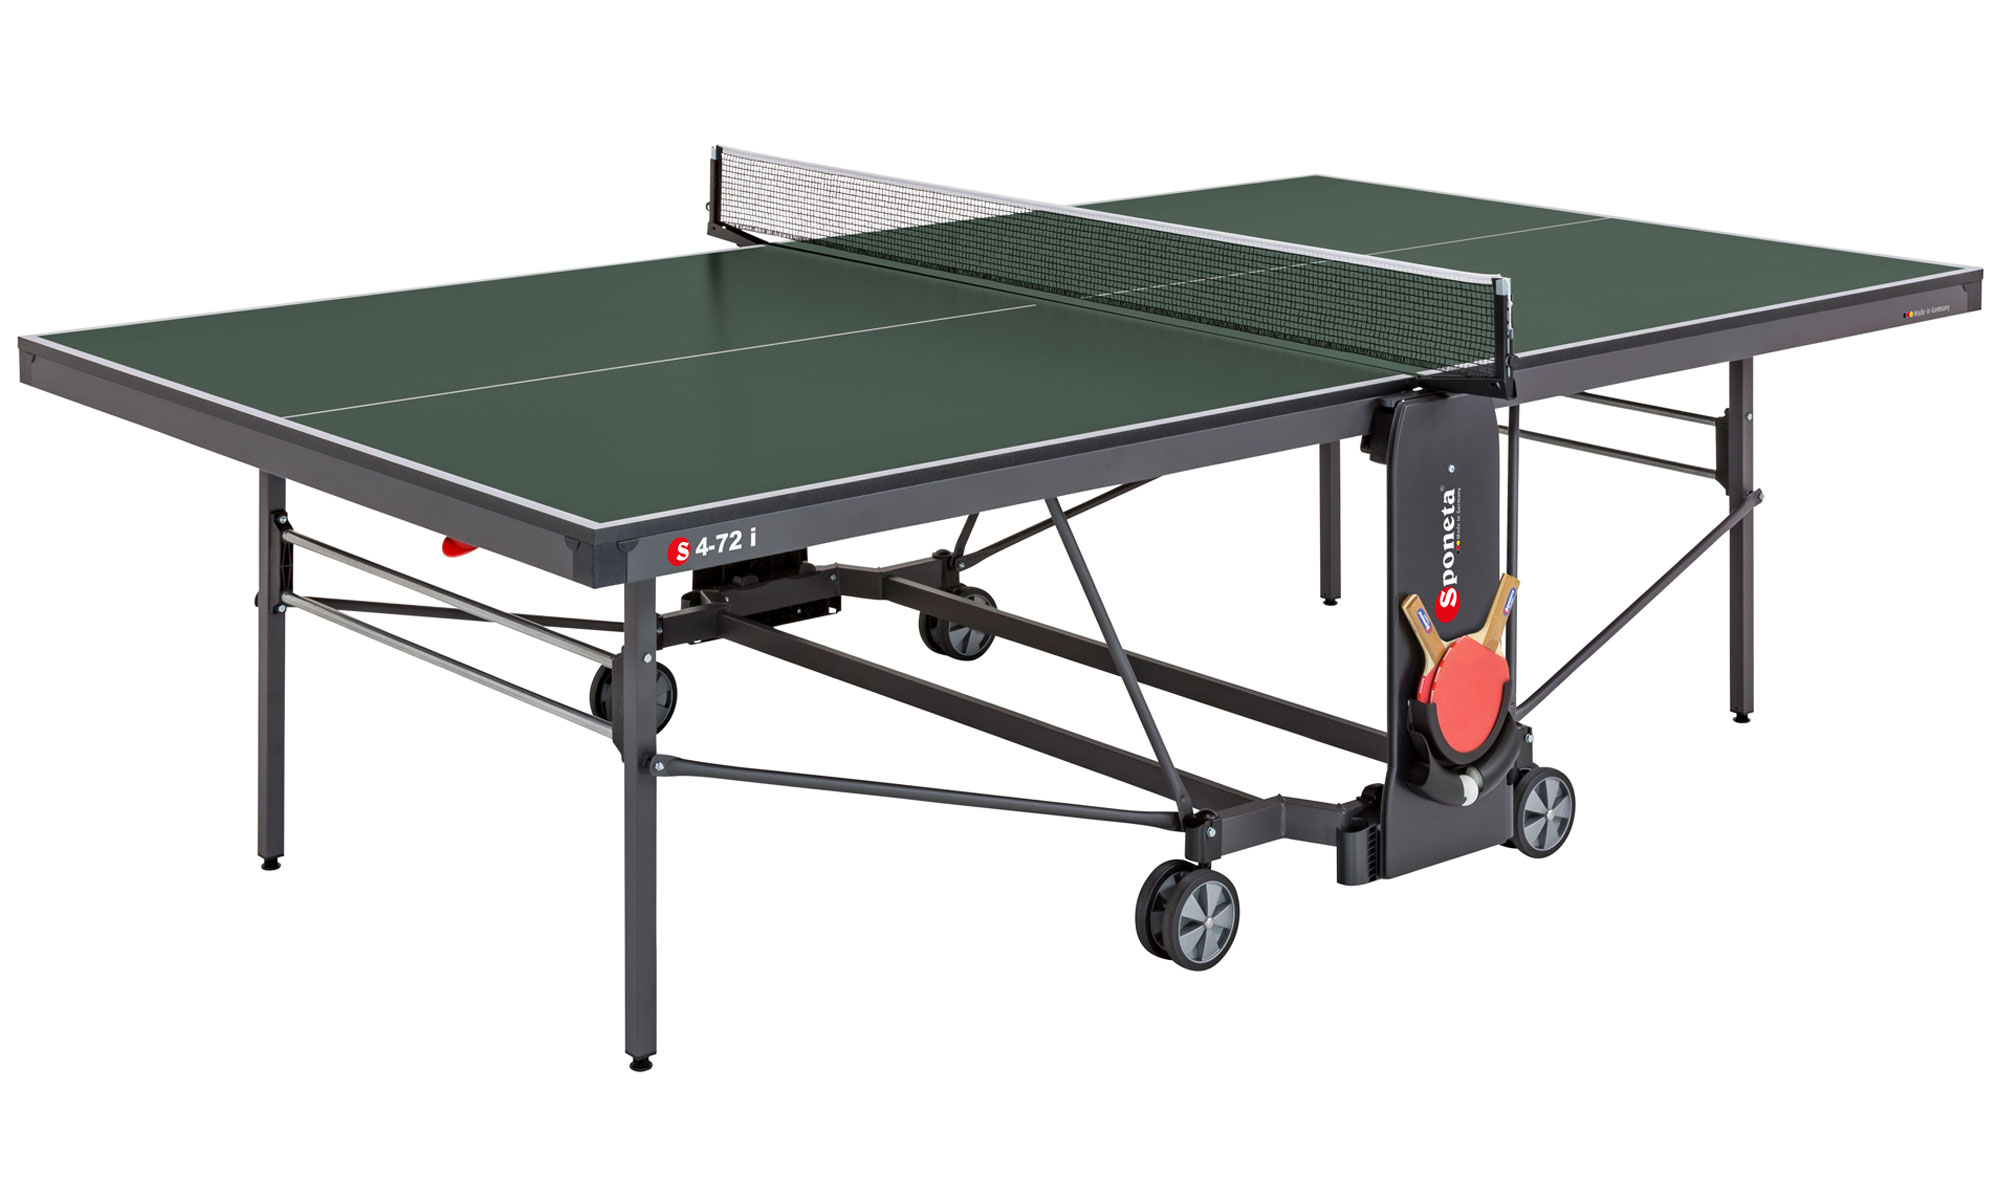 Sponeta Expert Line Indoor table tennis table in Green